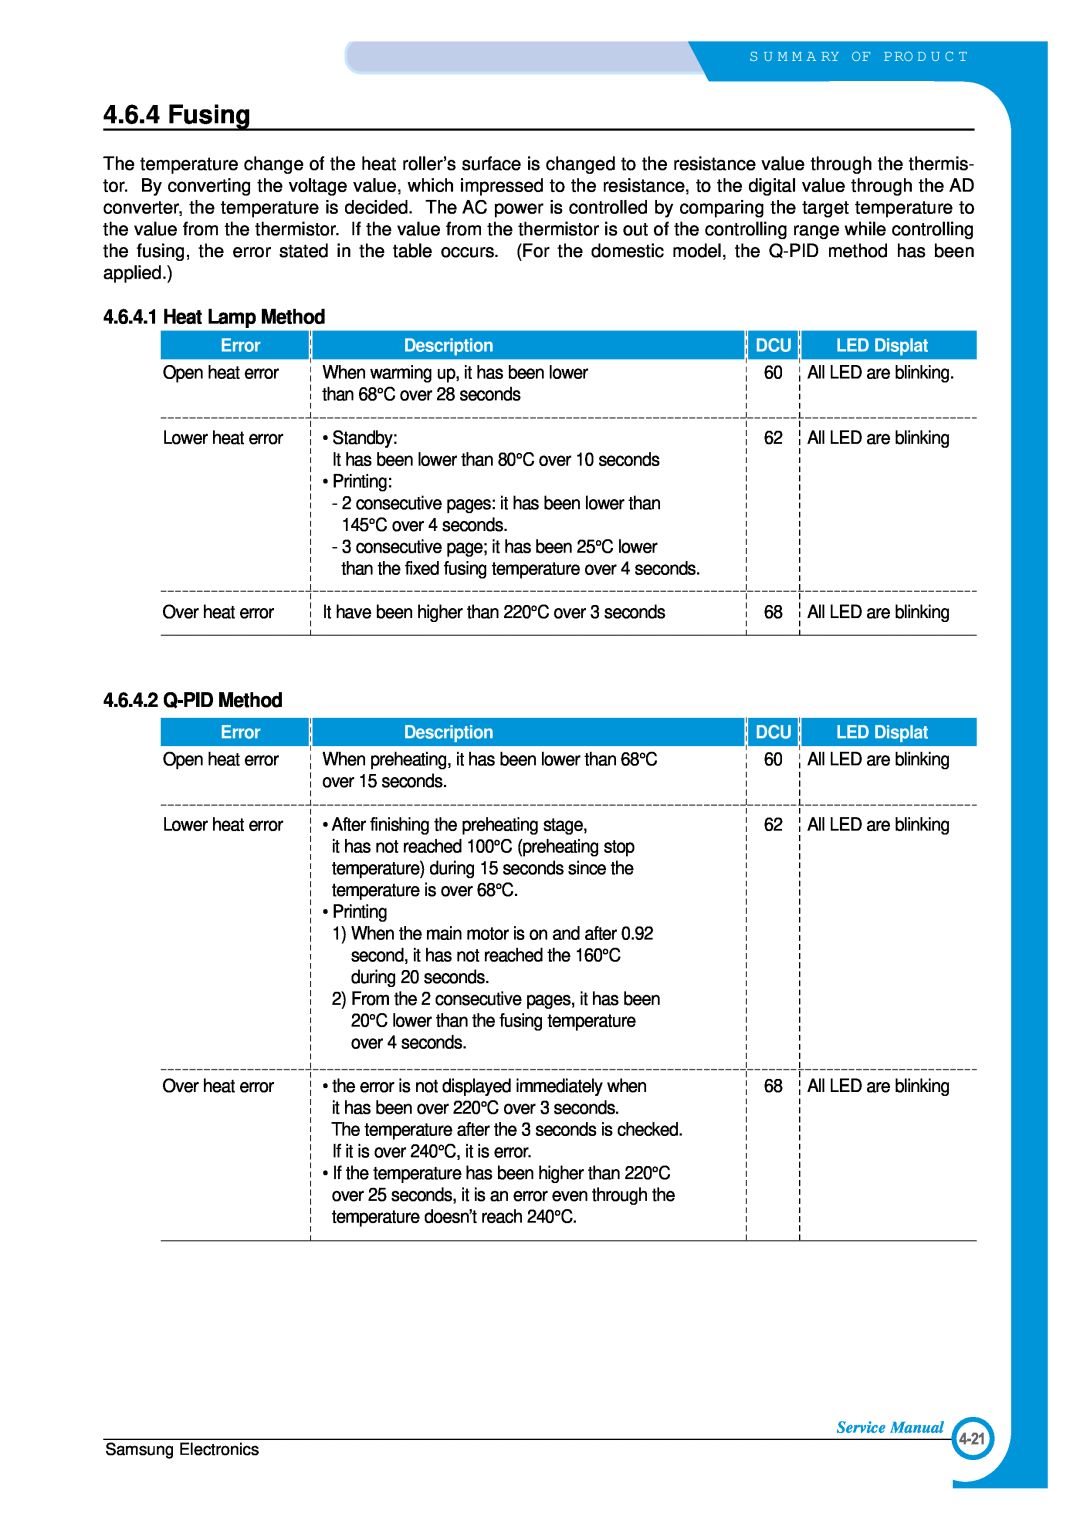 Samsung ML-1700 specifications Fusing, Heat Lamp Method, Q-PID Method, Error, Description 